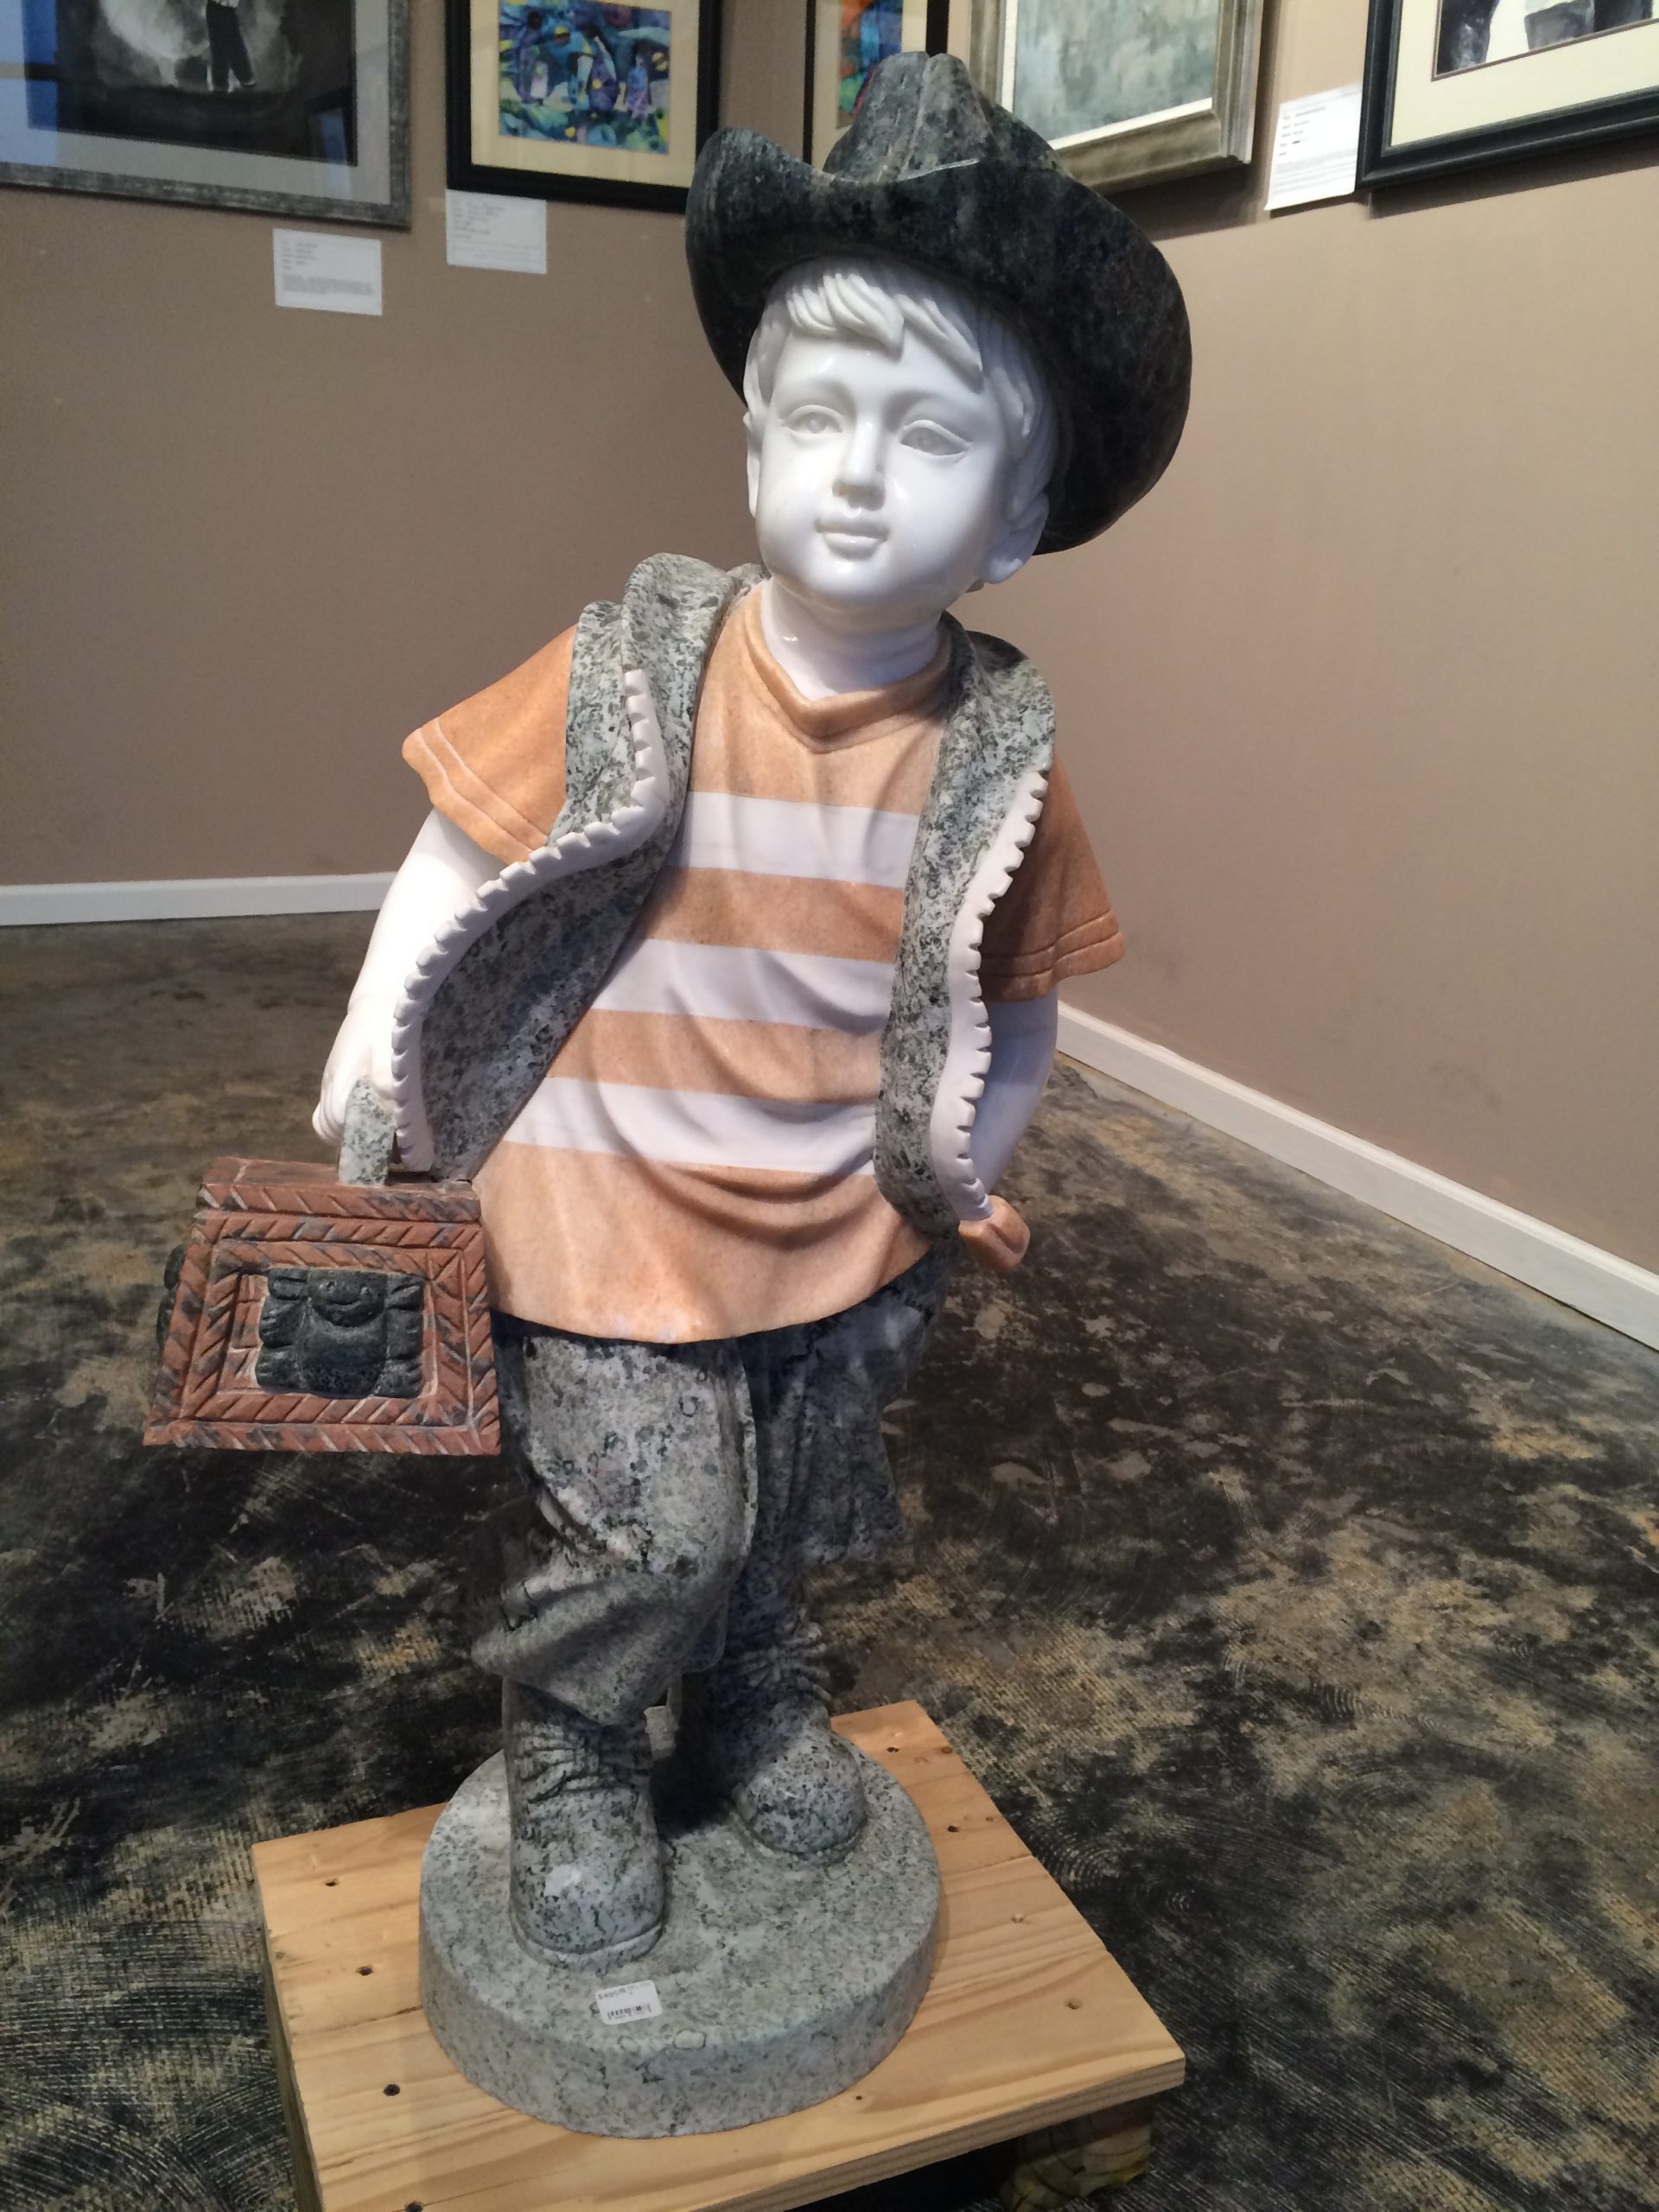 Marble Statue Little Boy with Cowboy HatLittle Boy with Cowboy Hat Statue